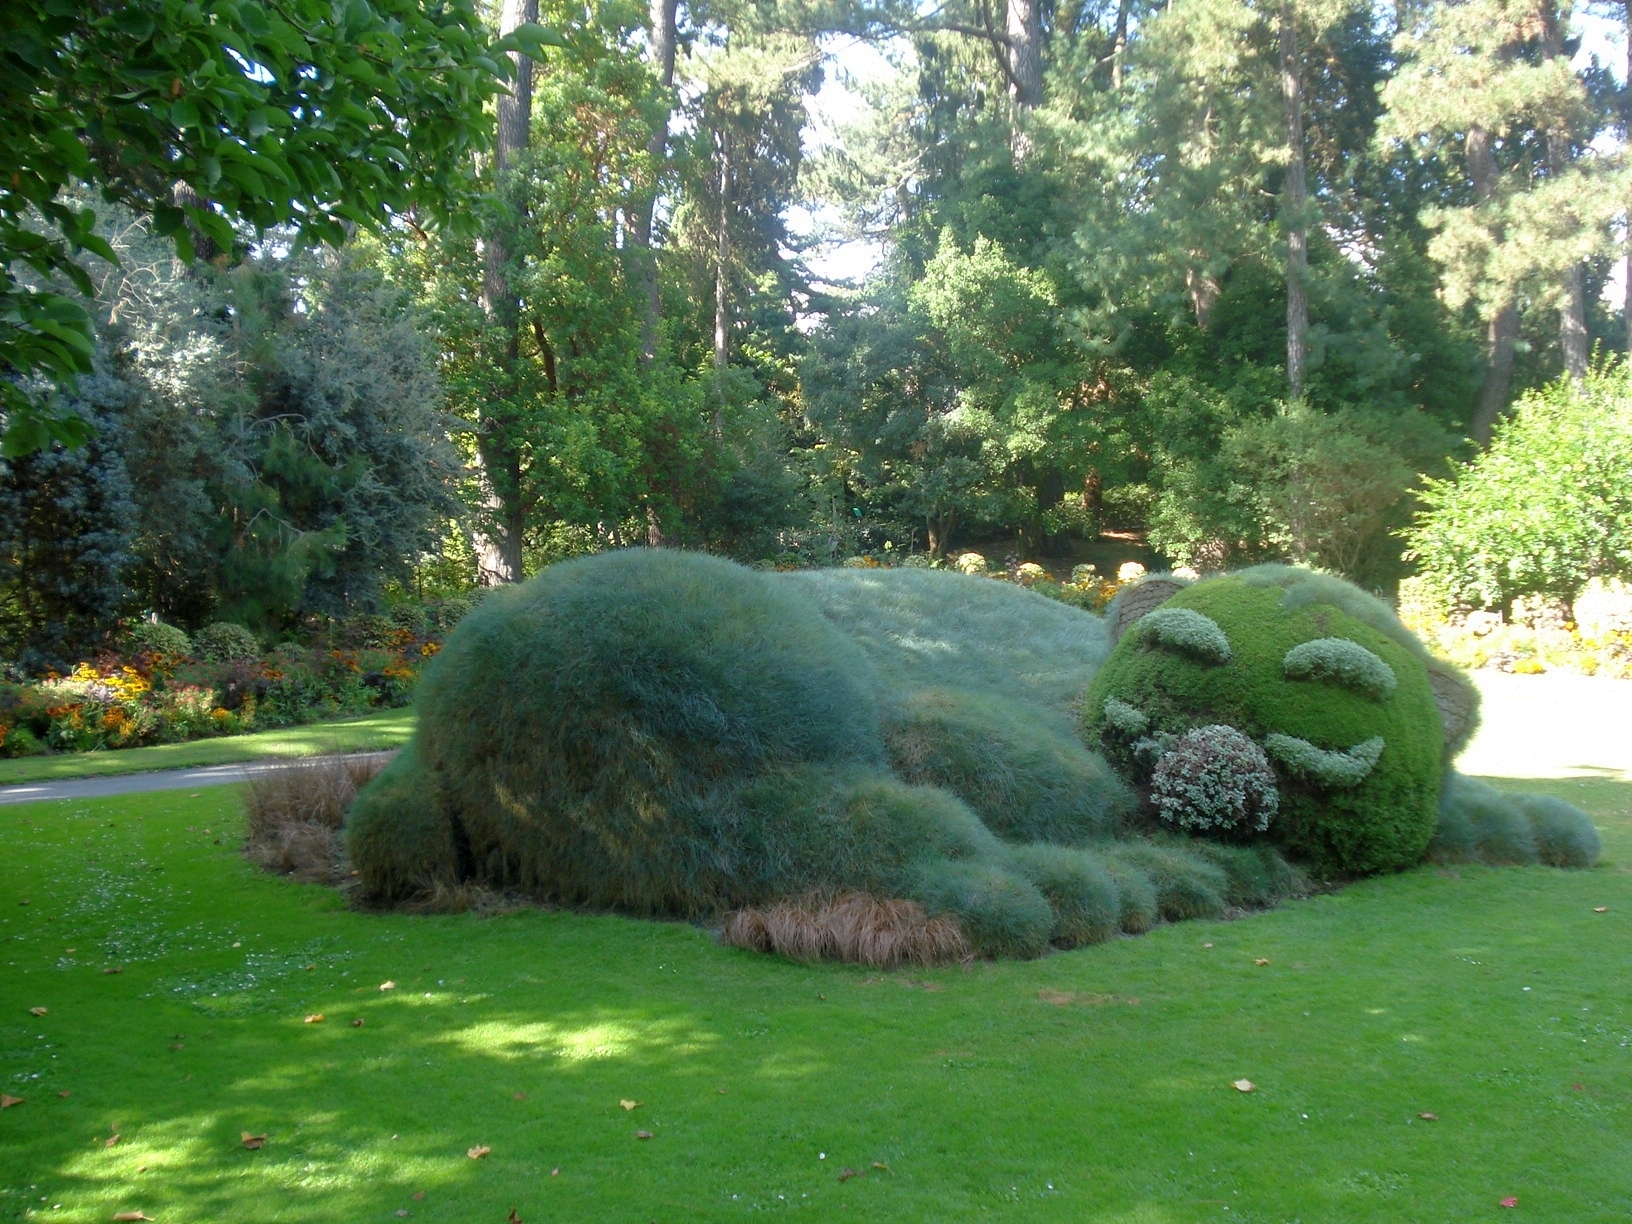 Wunderwelt: Kinderbuchautor Claude Ponti hat den Jardin des plantes verzaubert.